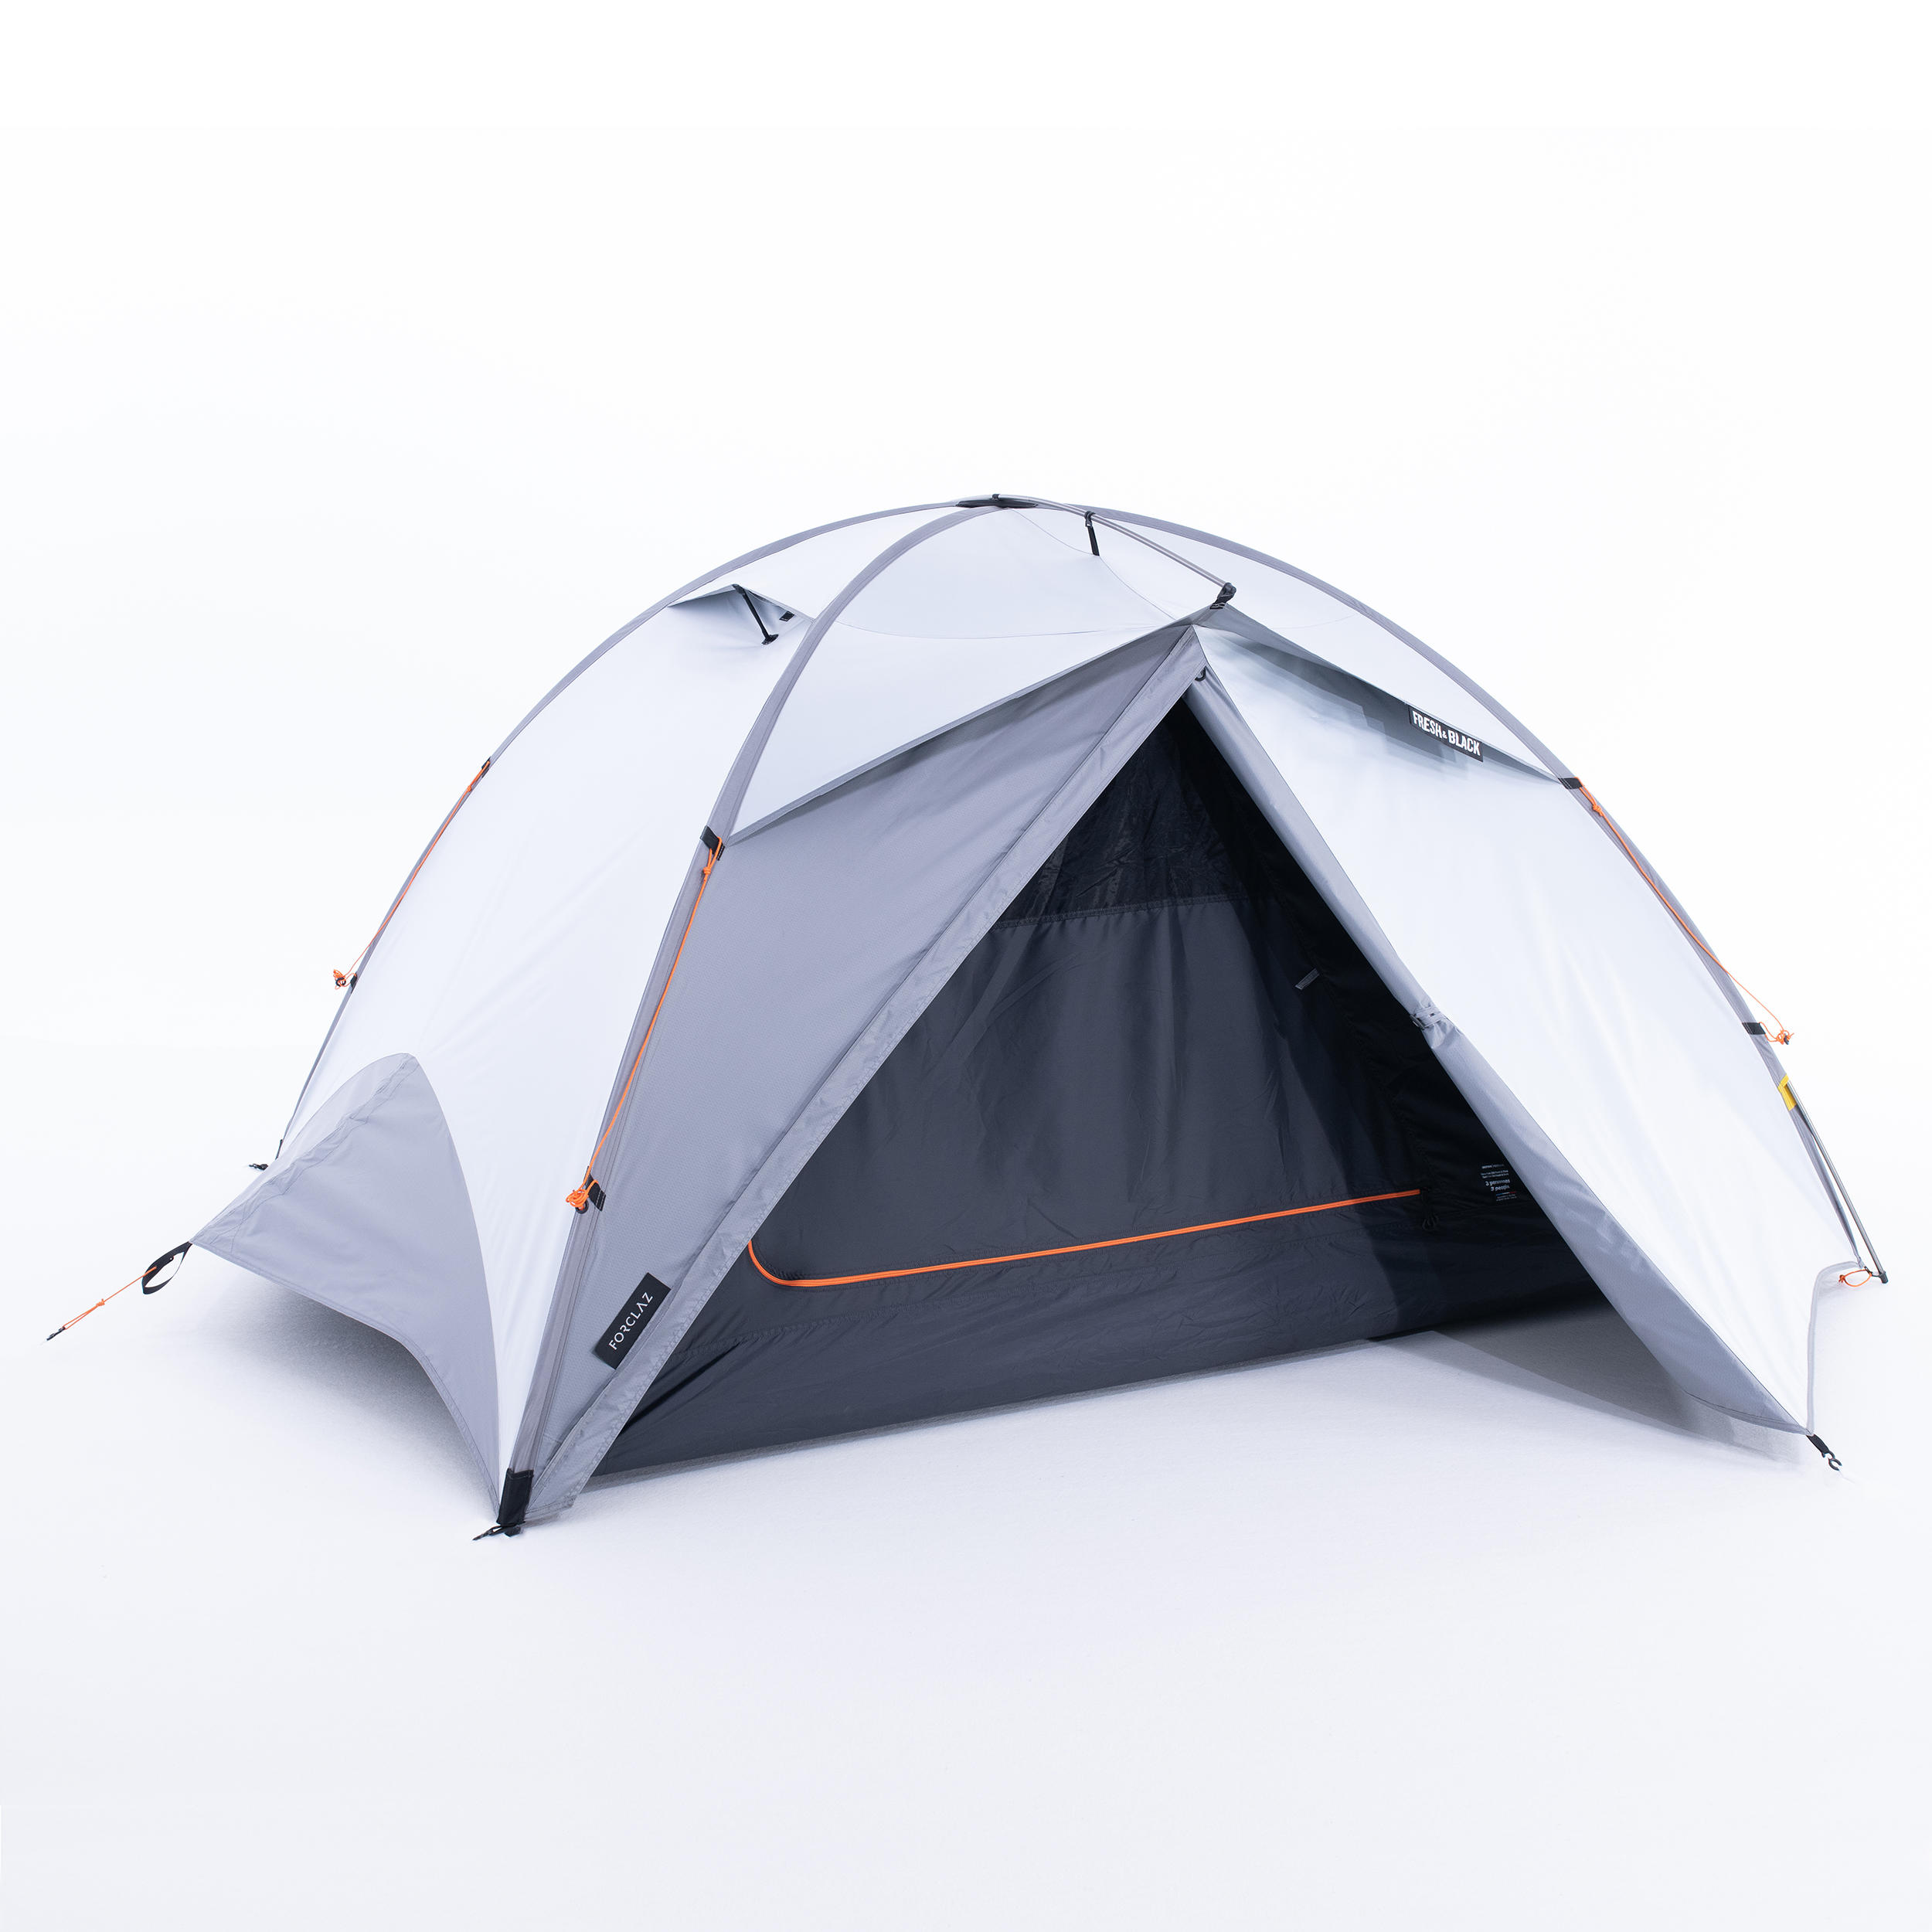 decathlon uk tents